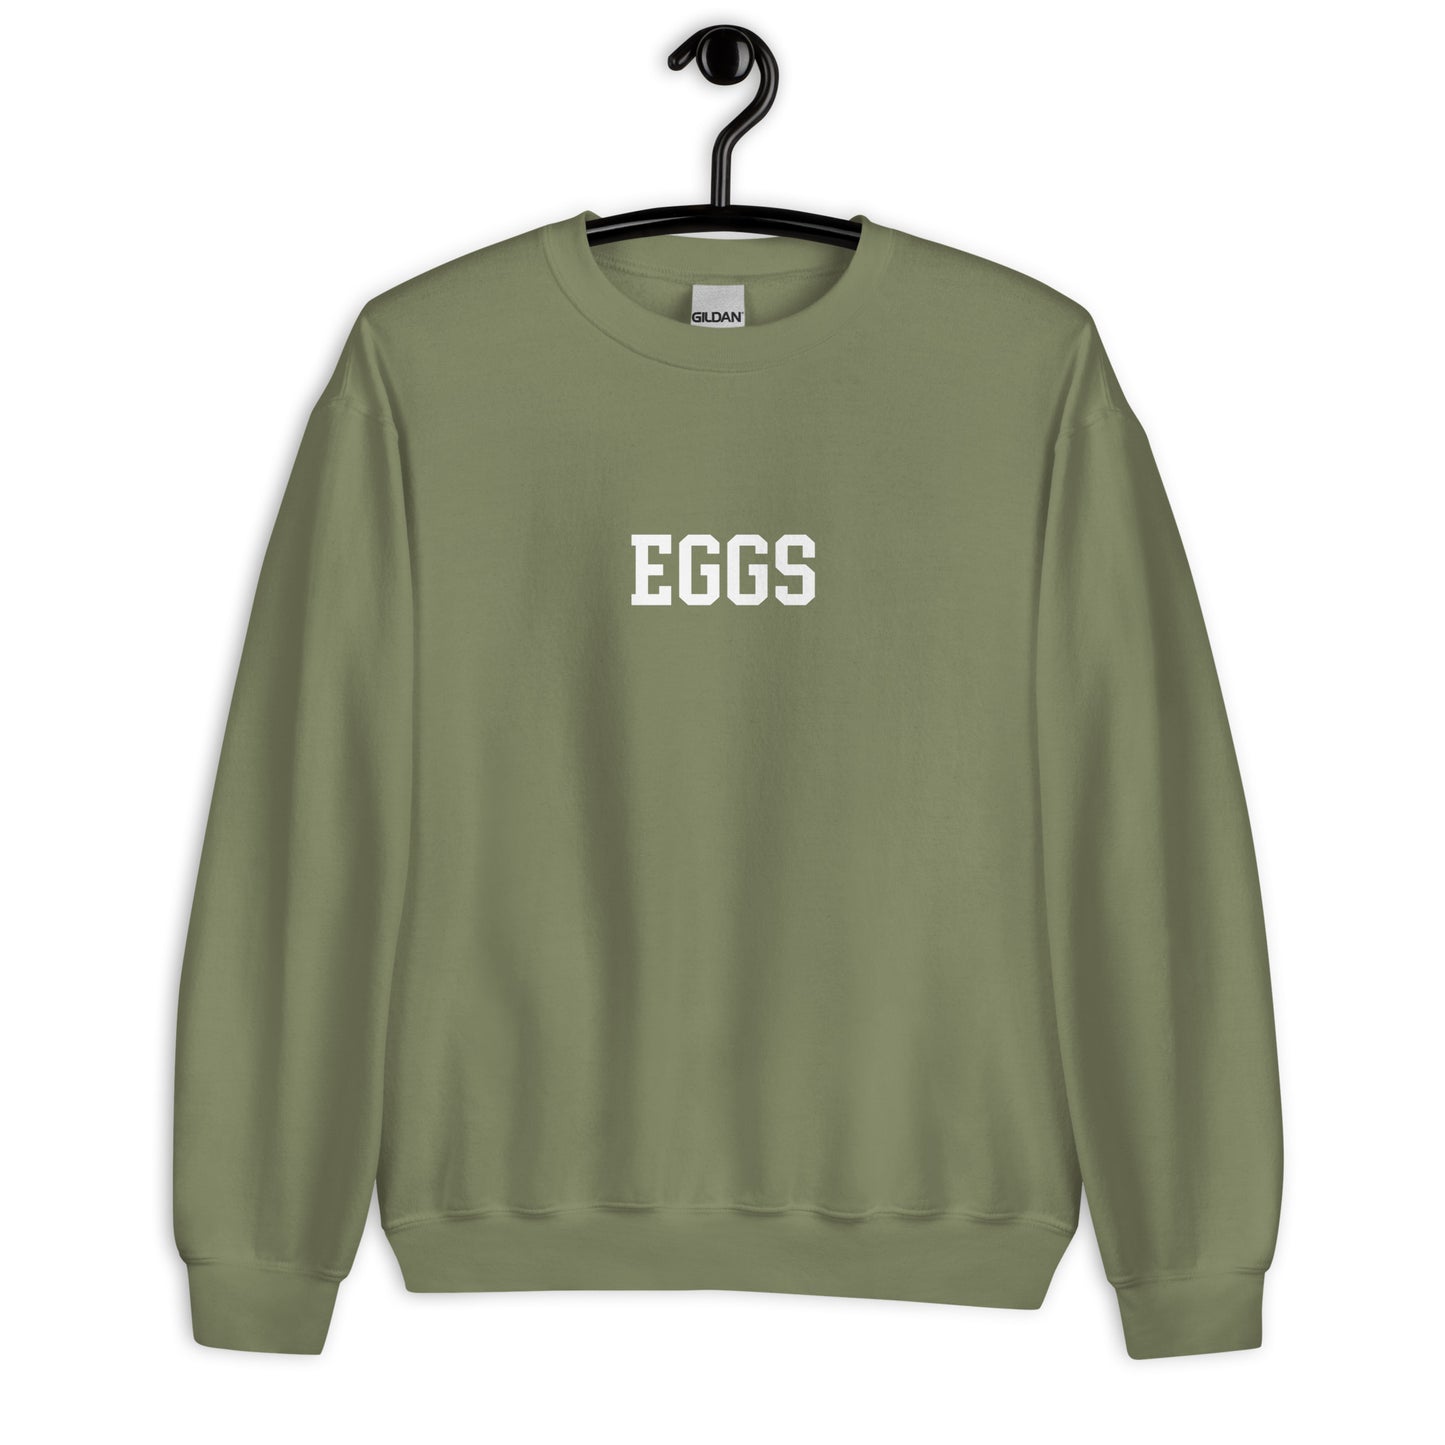 Eggs Sweatshirt - Straight Font